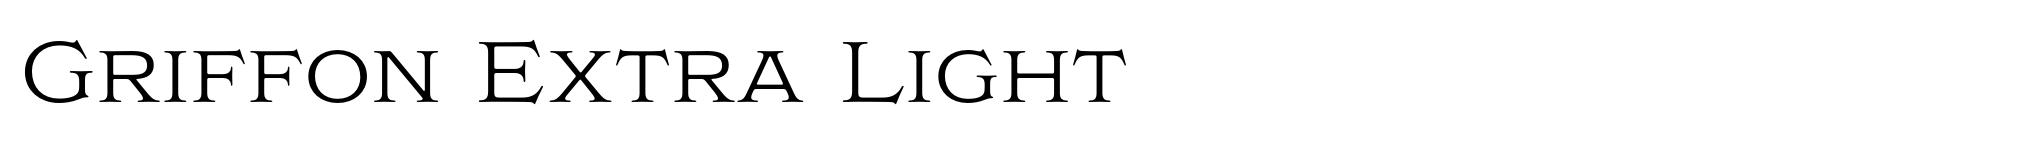 Griffon Extra Light image